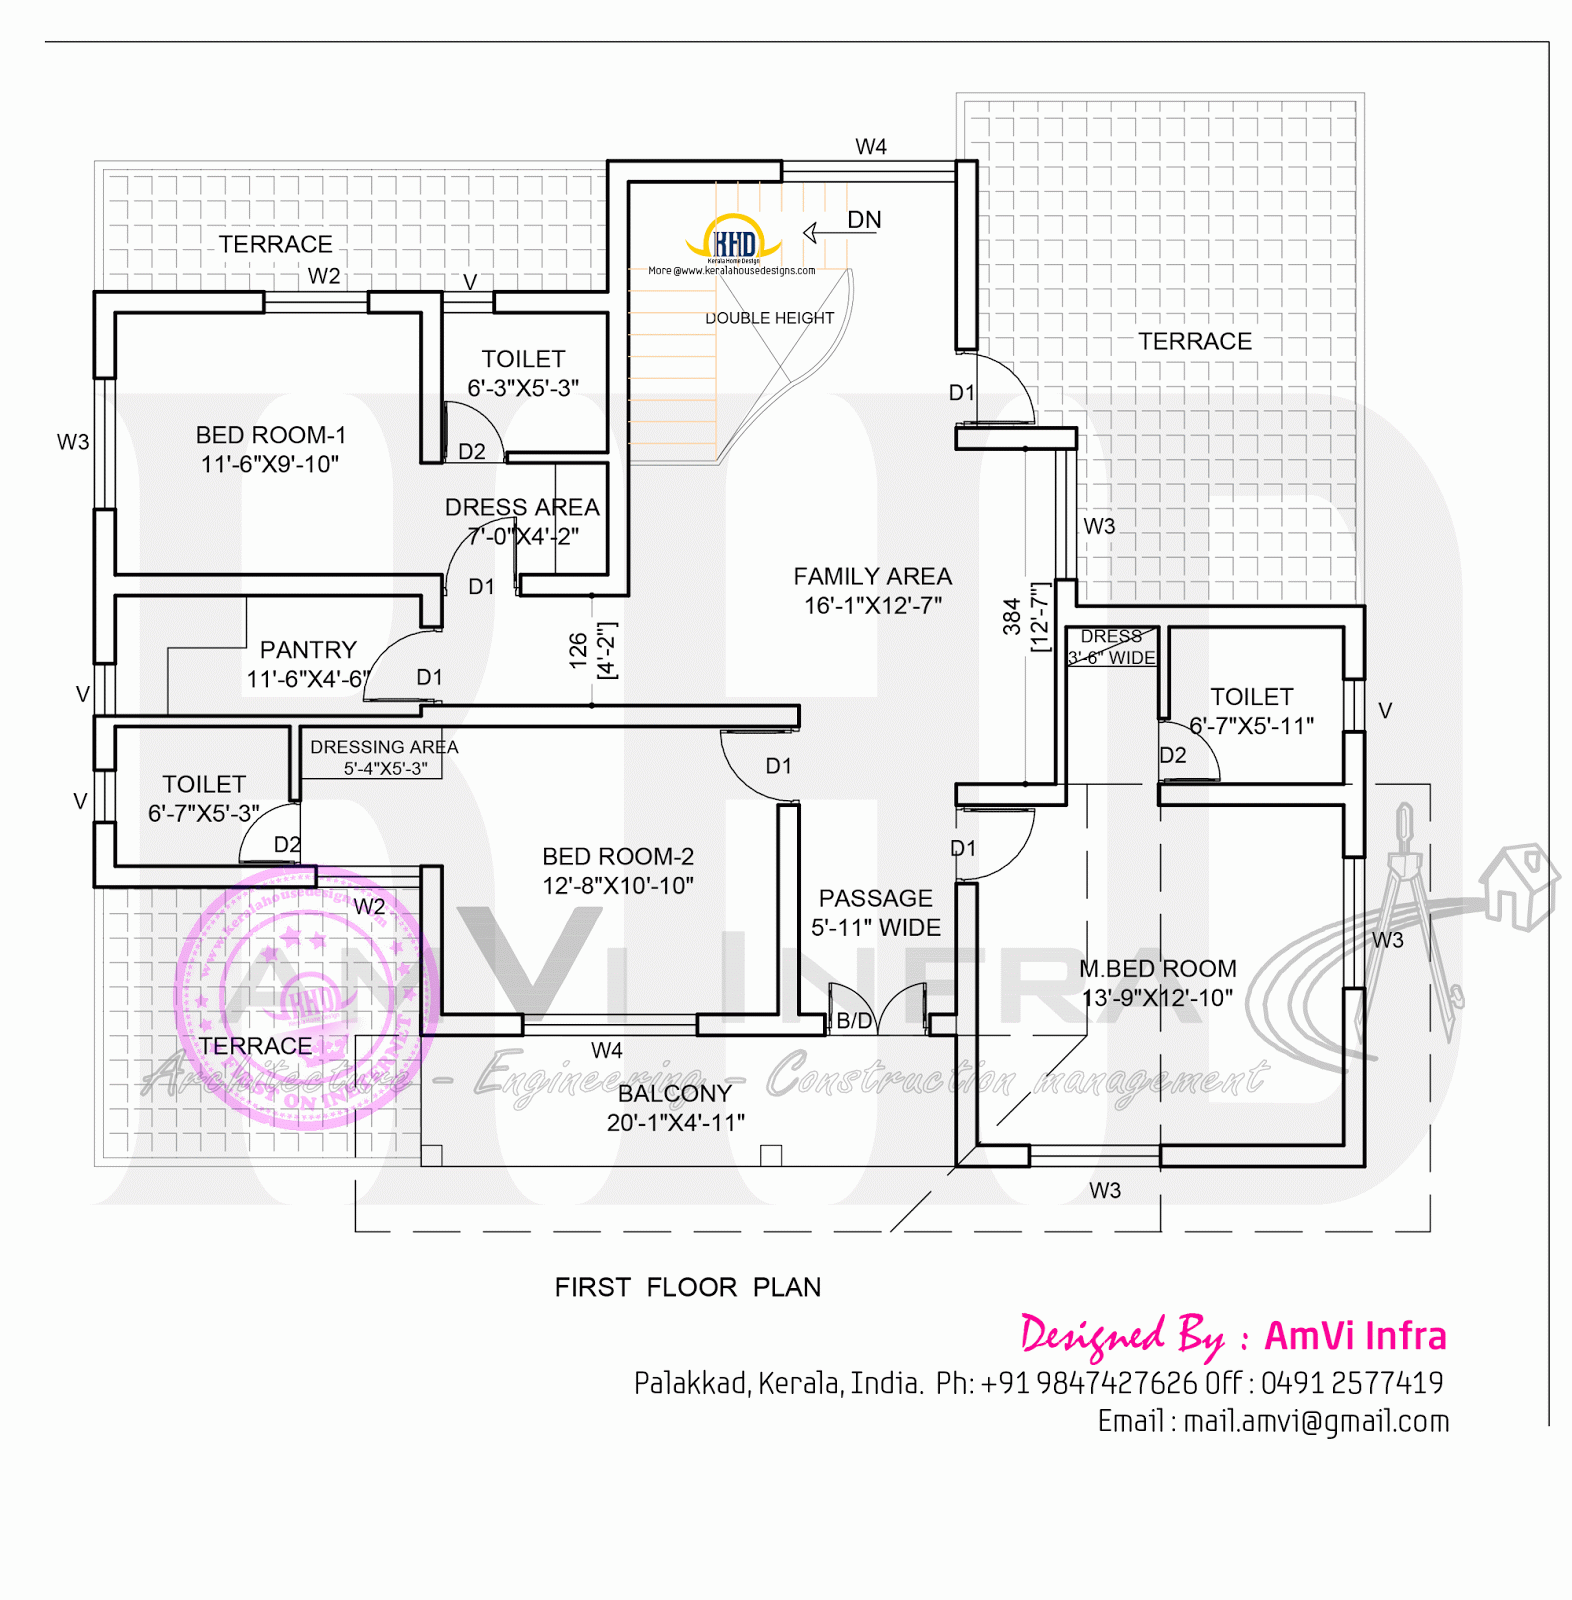  5  bedroom  house  elevation  with floor plan  Kerala home  